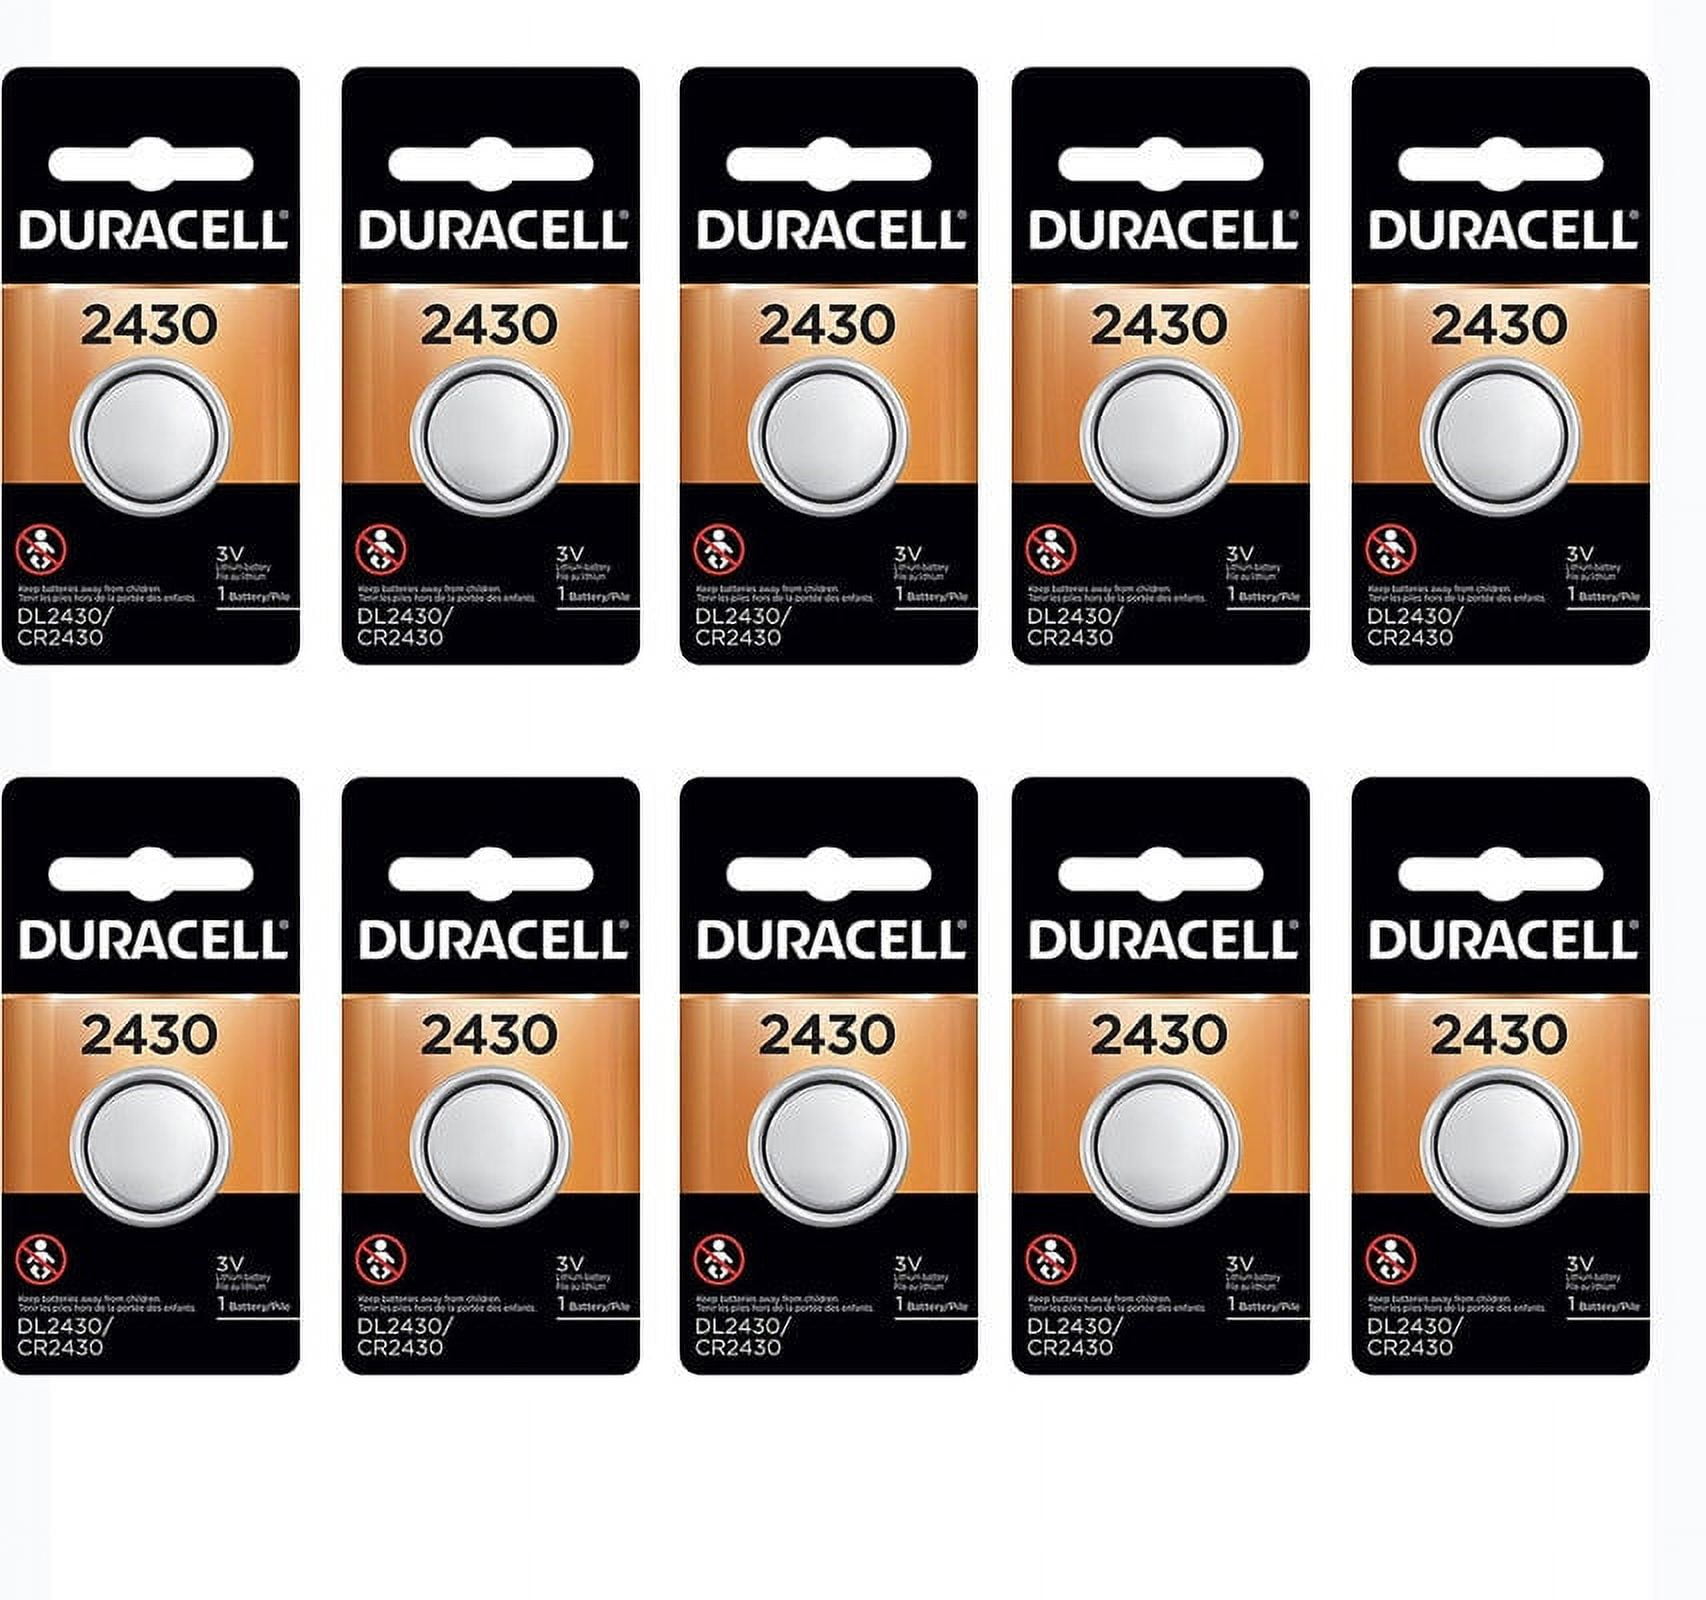 2 2430 Duracell Coin Cell Batteries - Lithium 3V - (CR2430, DL2430, ECR2430)